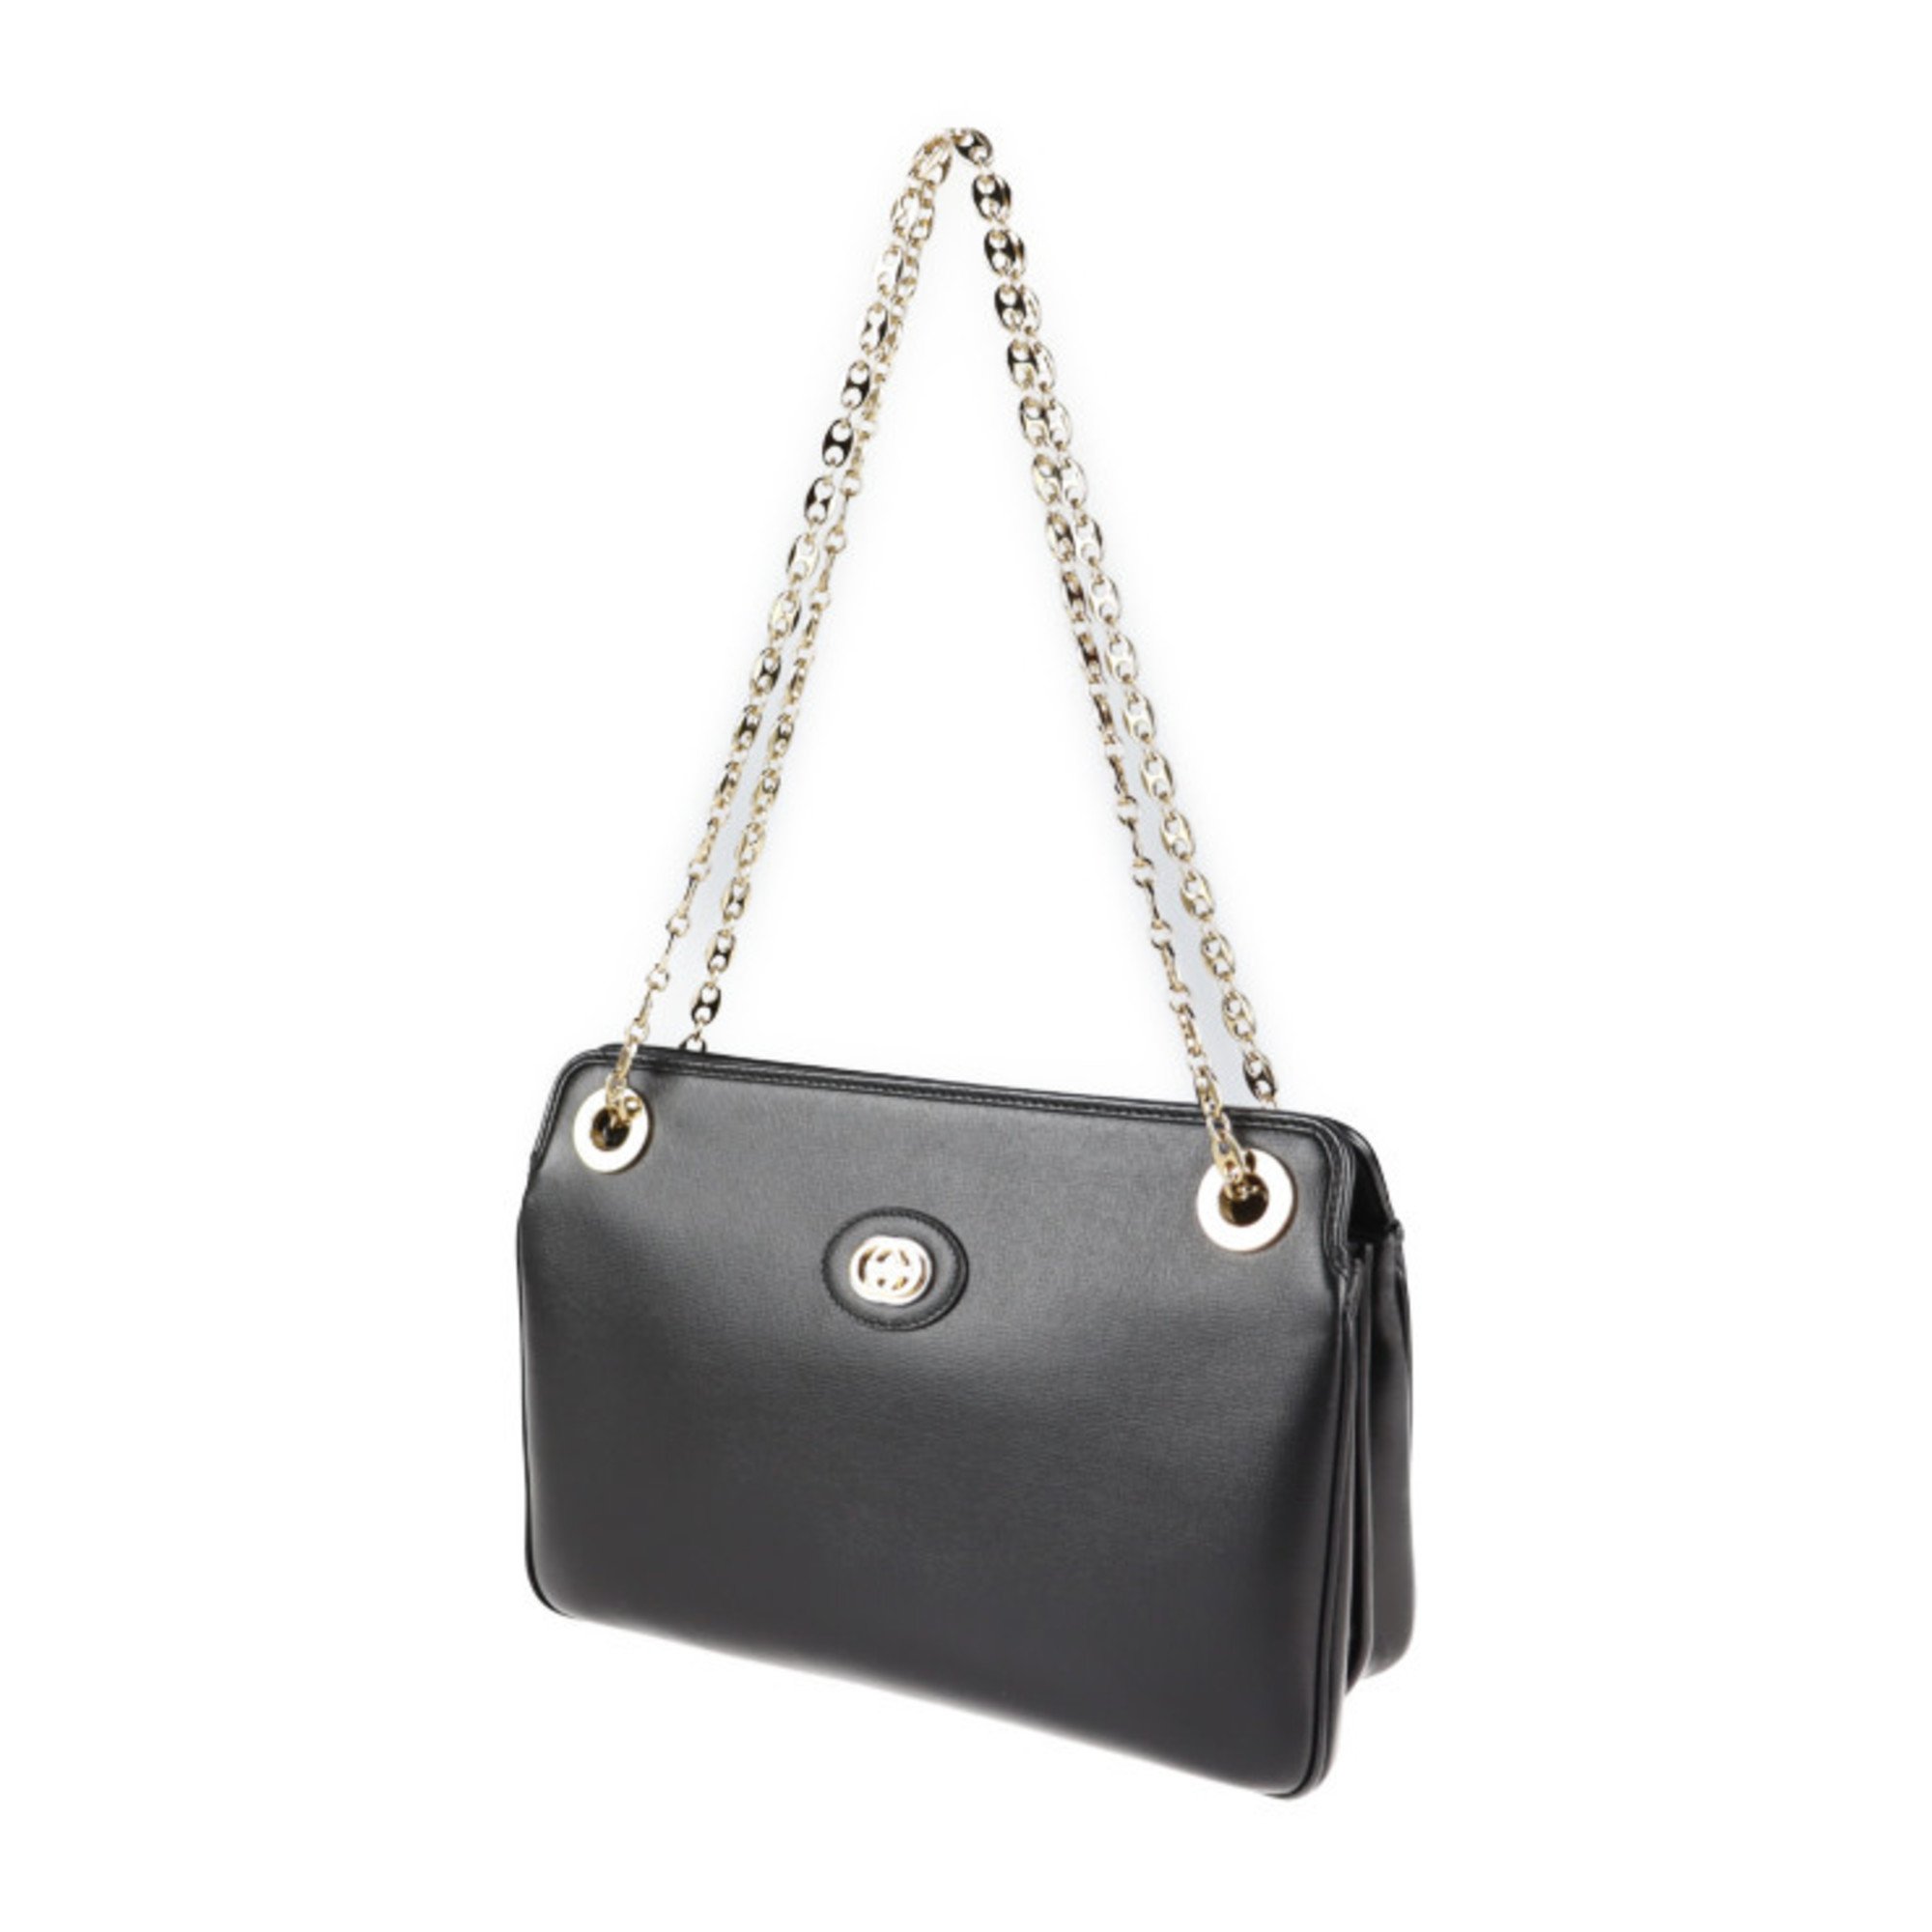 GUCCI Gucci Marina shoulder bag 576422 leather black chain